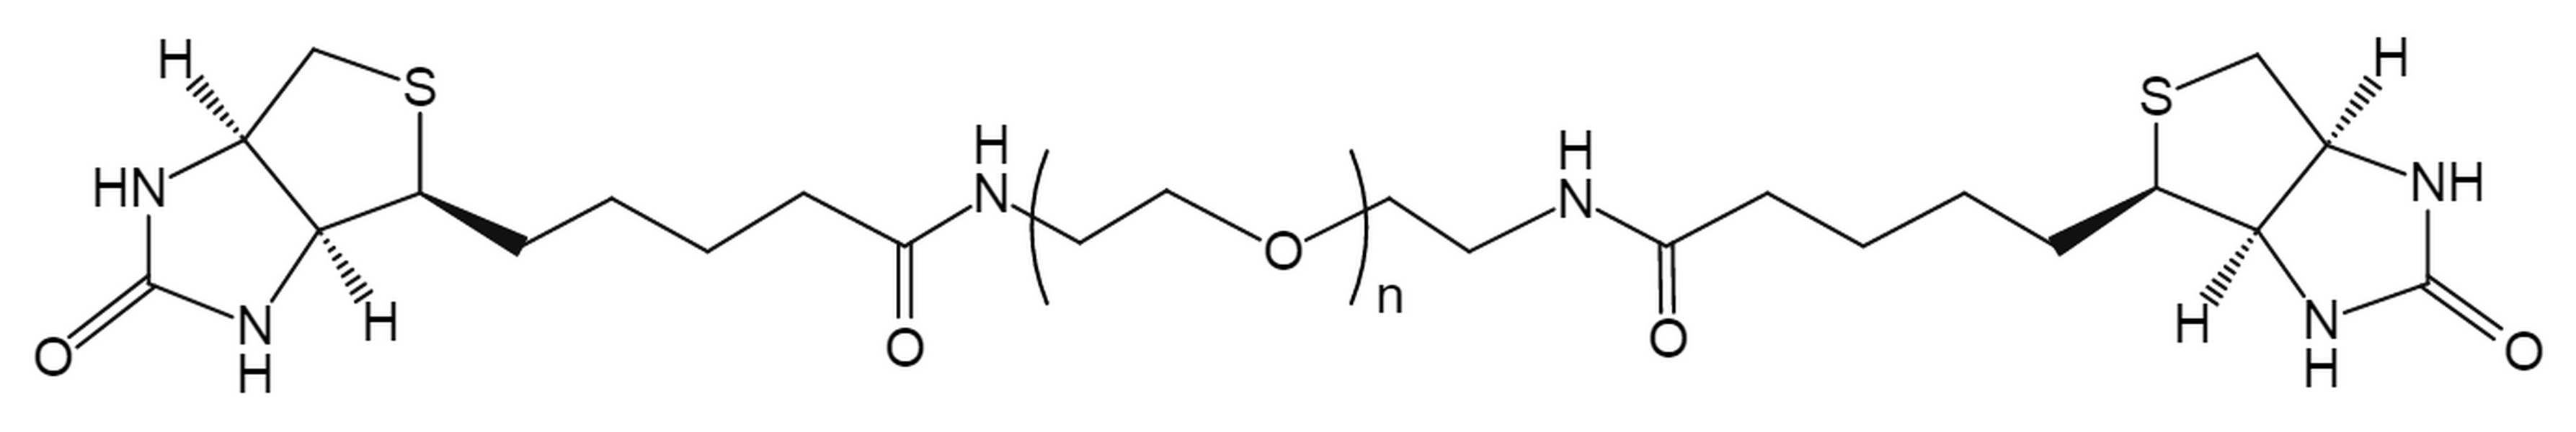 Biotin-PEG-Biotin, MW 1K